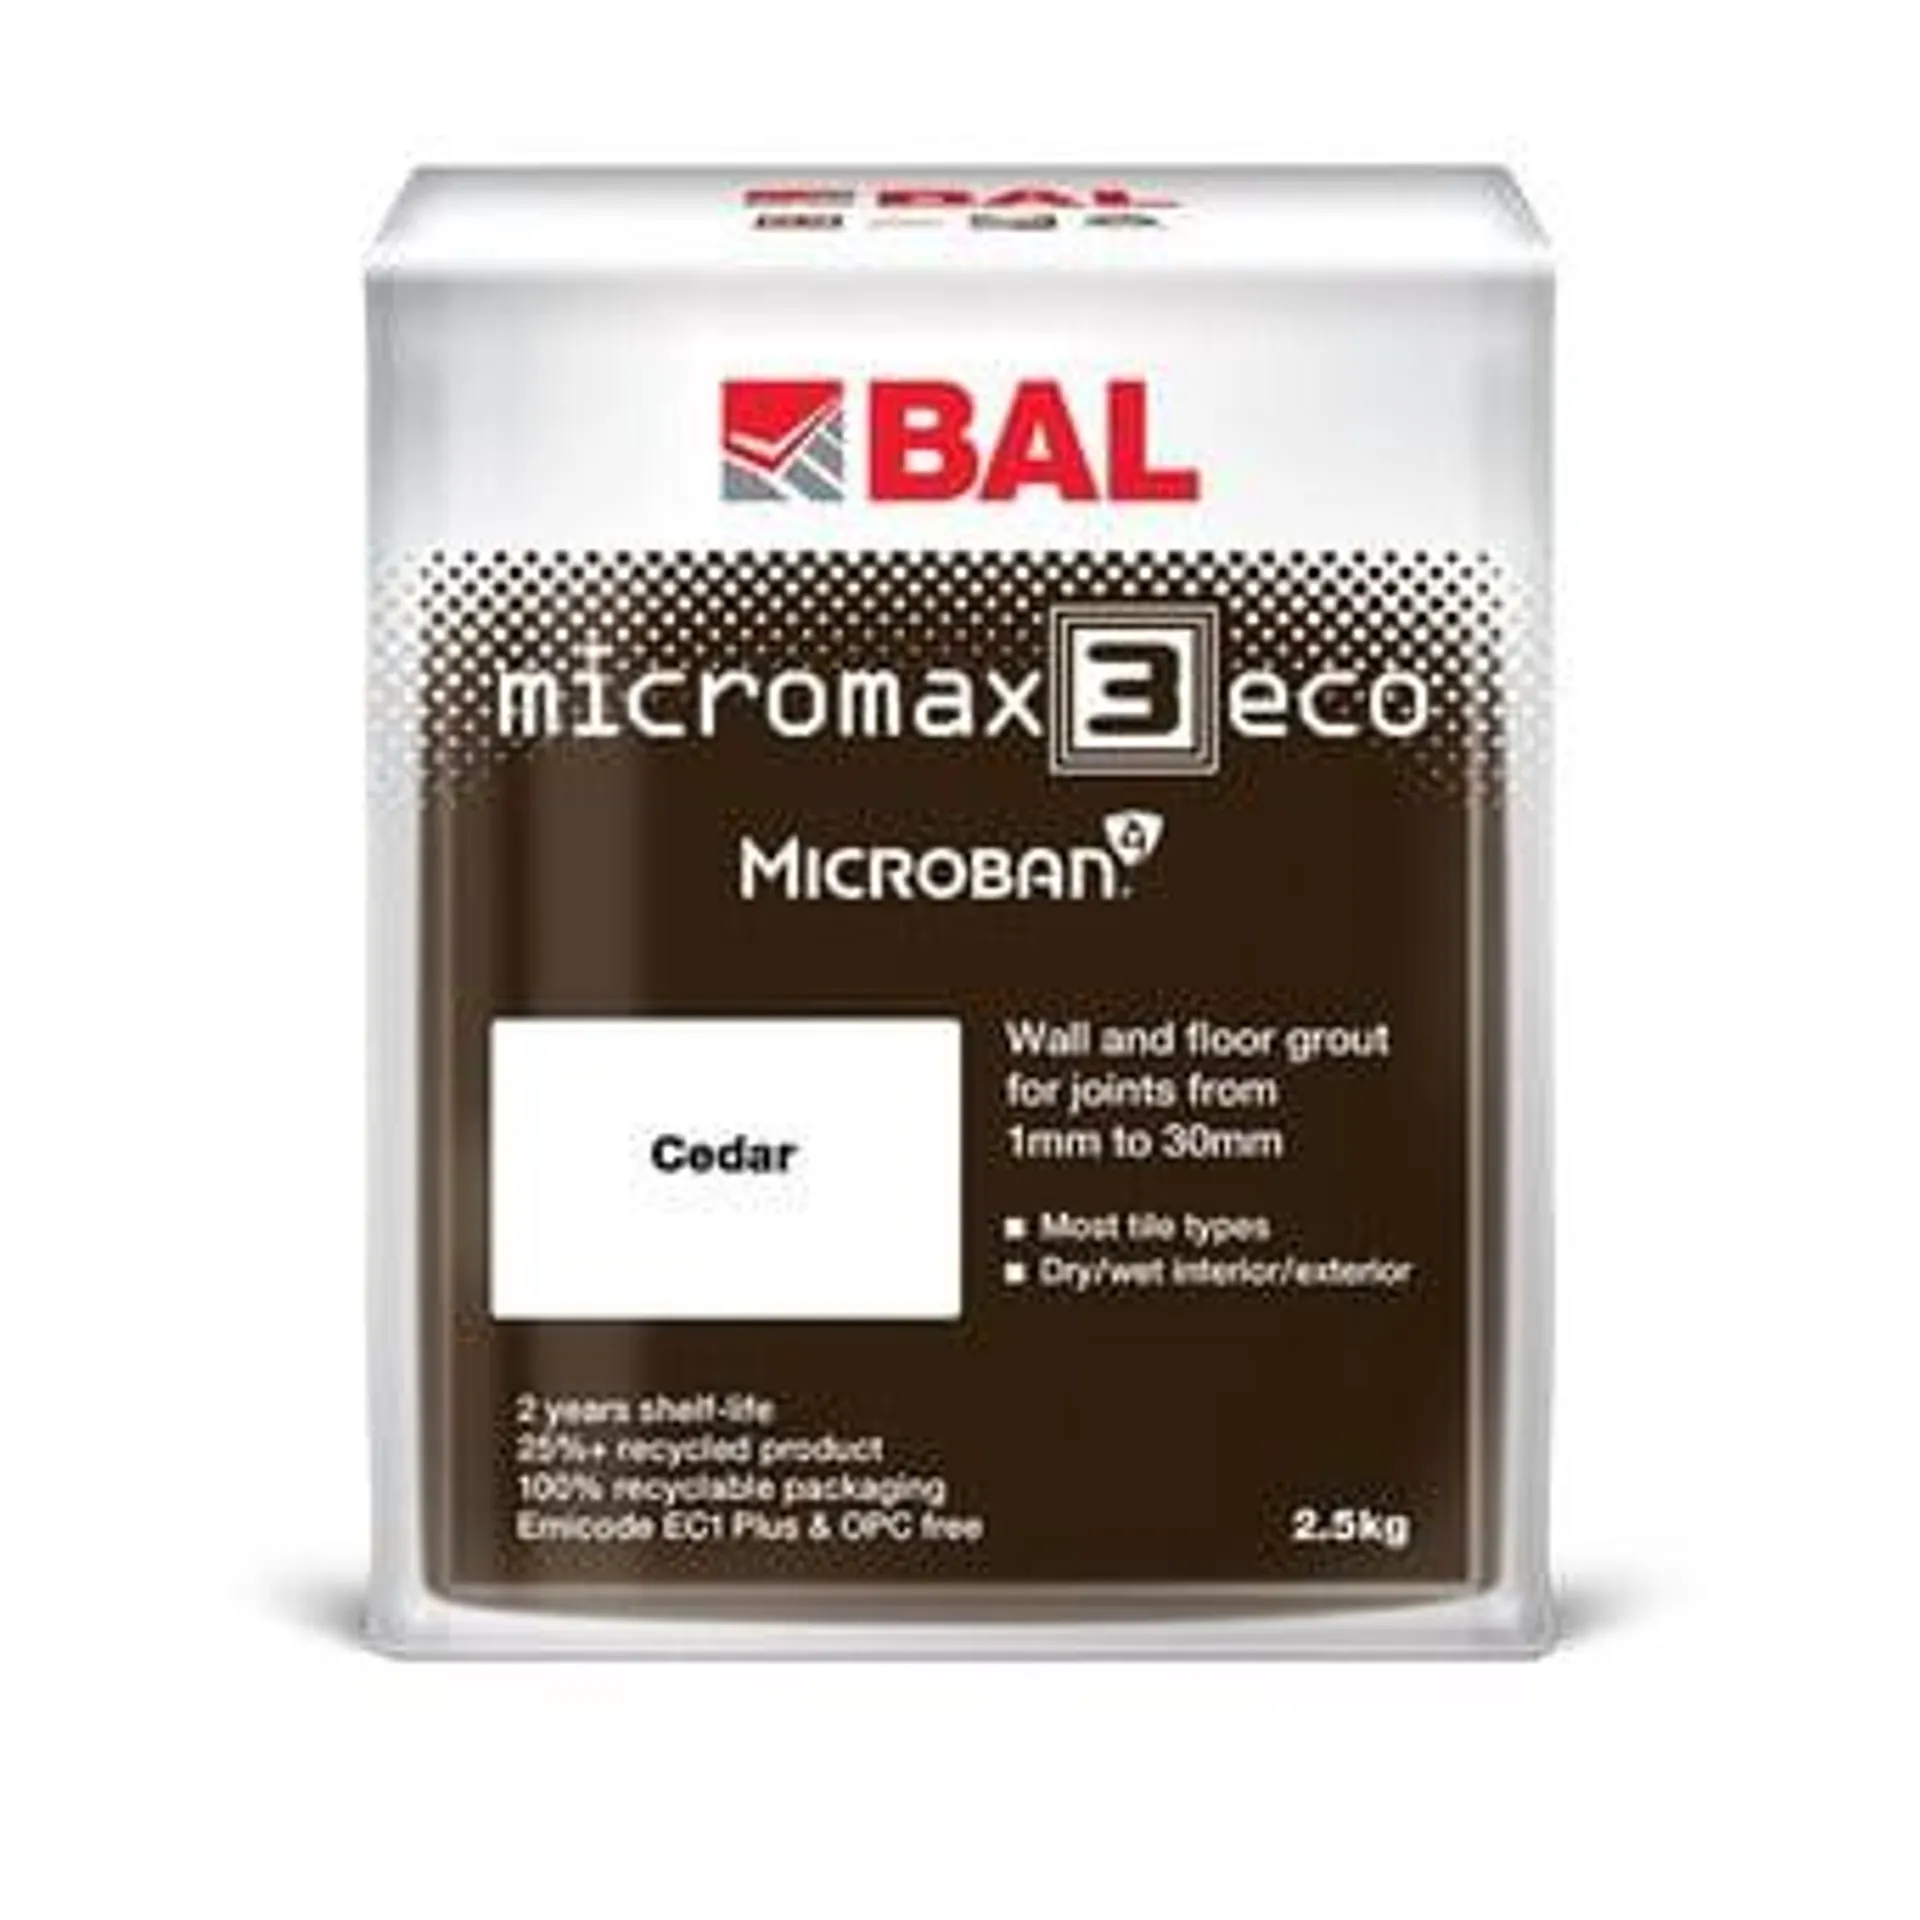 BAL Micromax3 Eco Grout Cedar 2.5kg